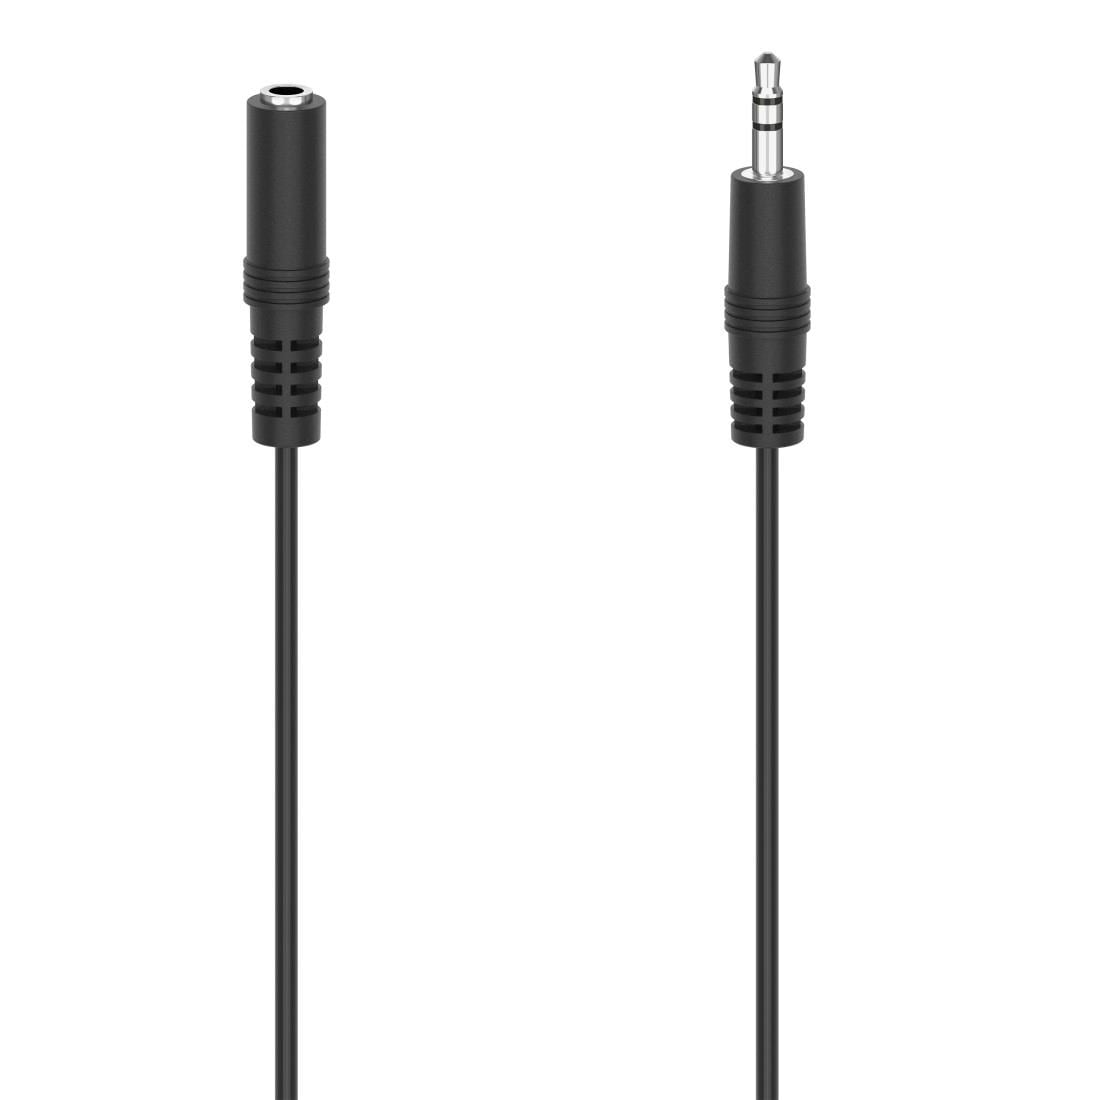 Hama Audio-Kabel »Audio-Kabel, 3,5-mm-Klinken-Stecker/Kupplung, Stereo, 5m«, 3,5-mm-Klinke, 3,5-mm-Klinke, 500 cm